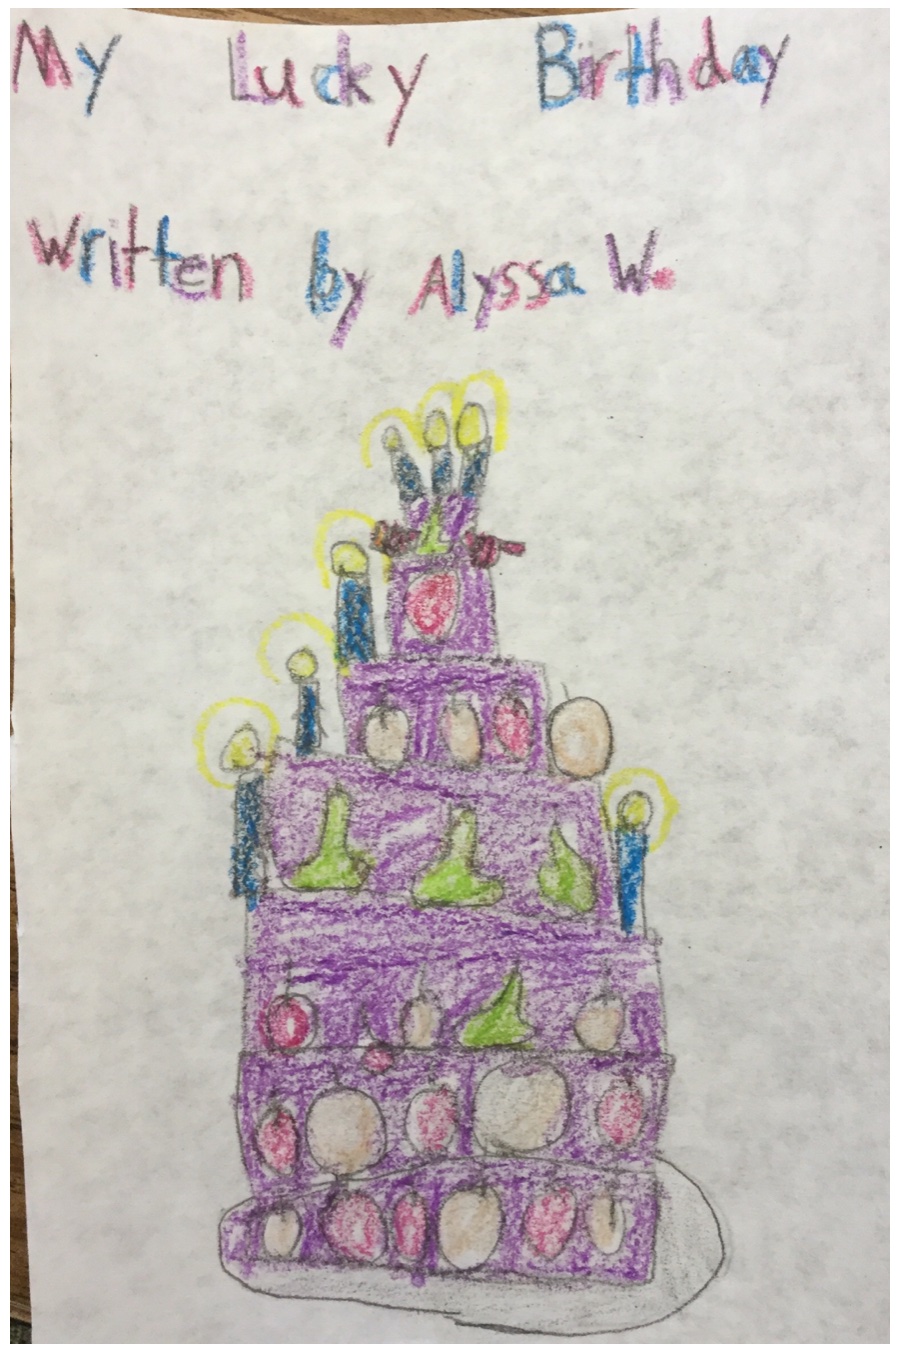 My Lucky Birthday By Alyssa W